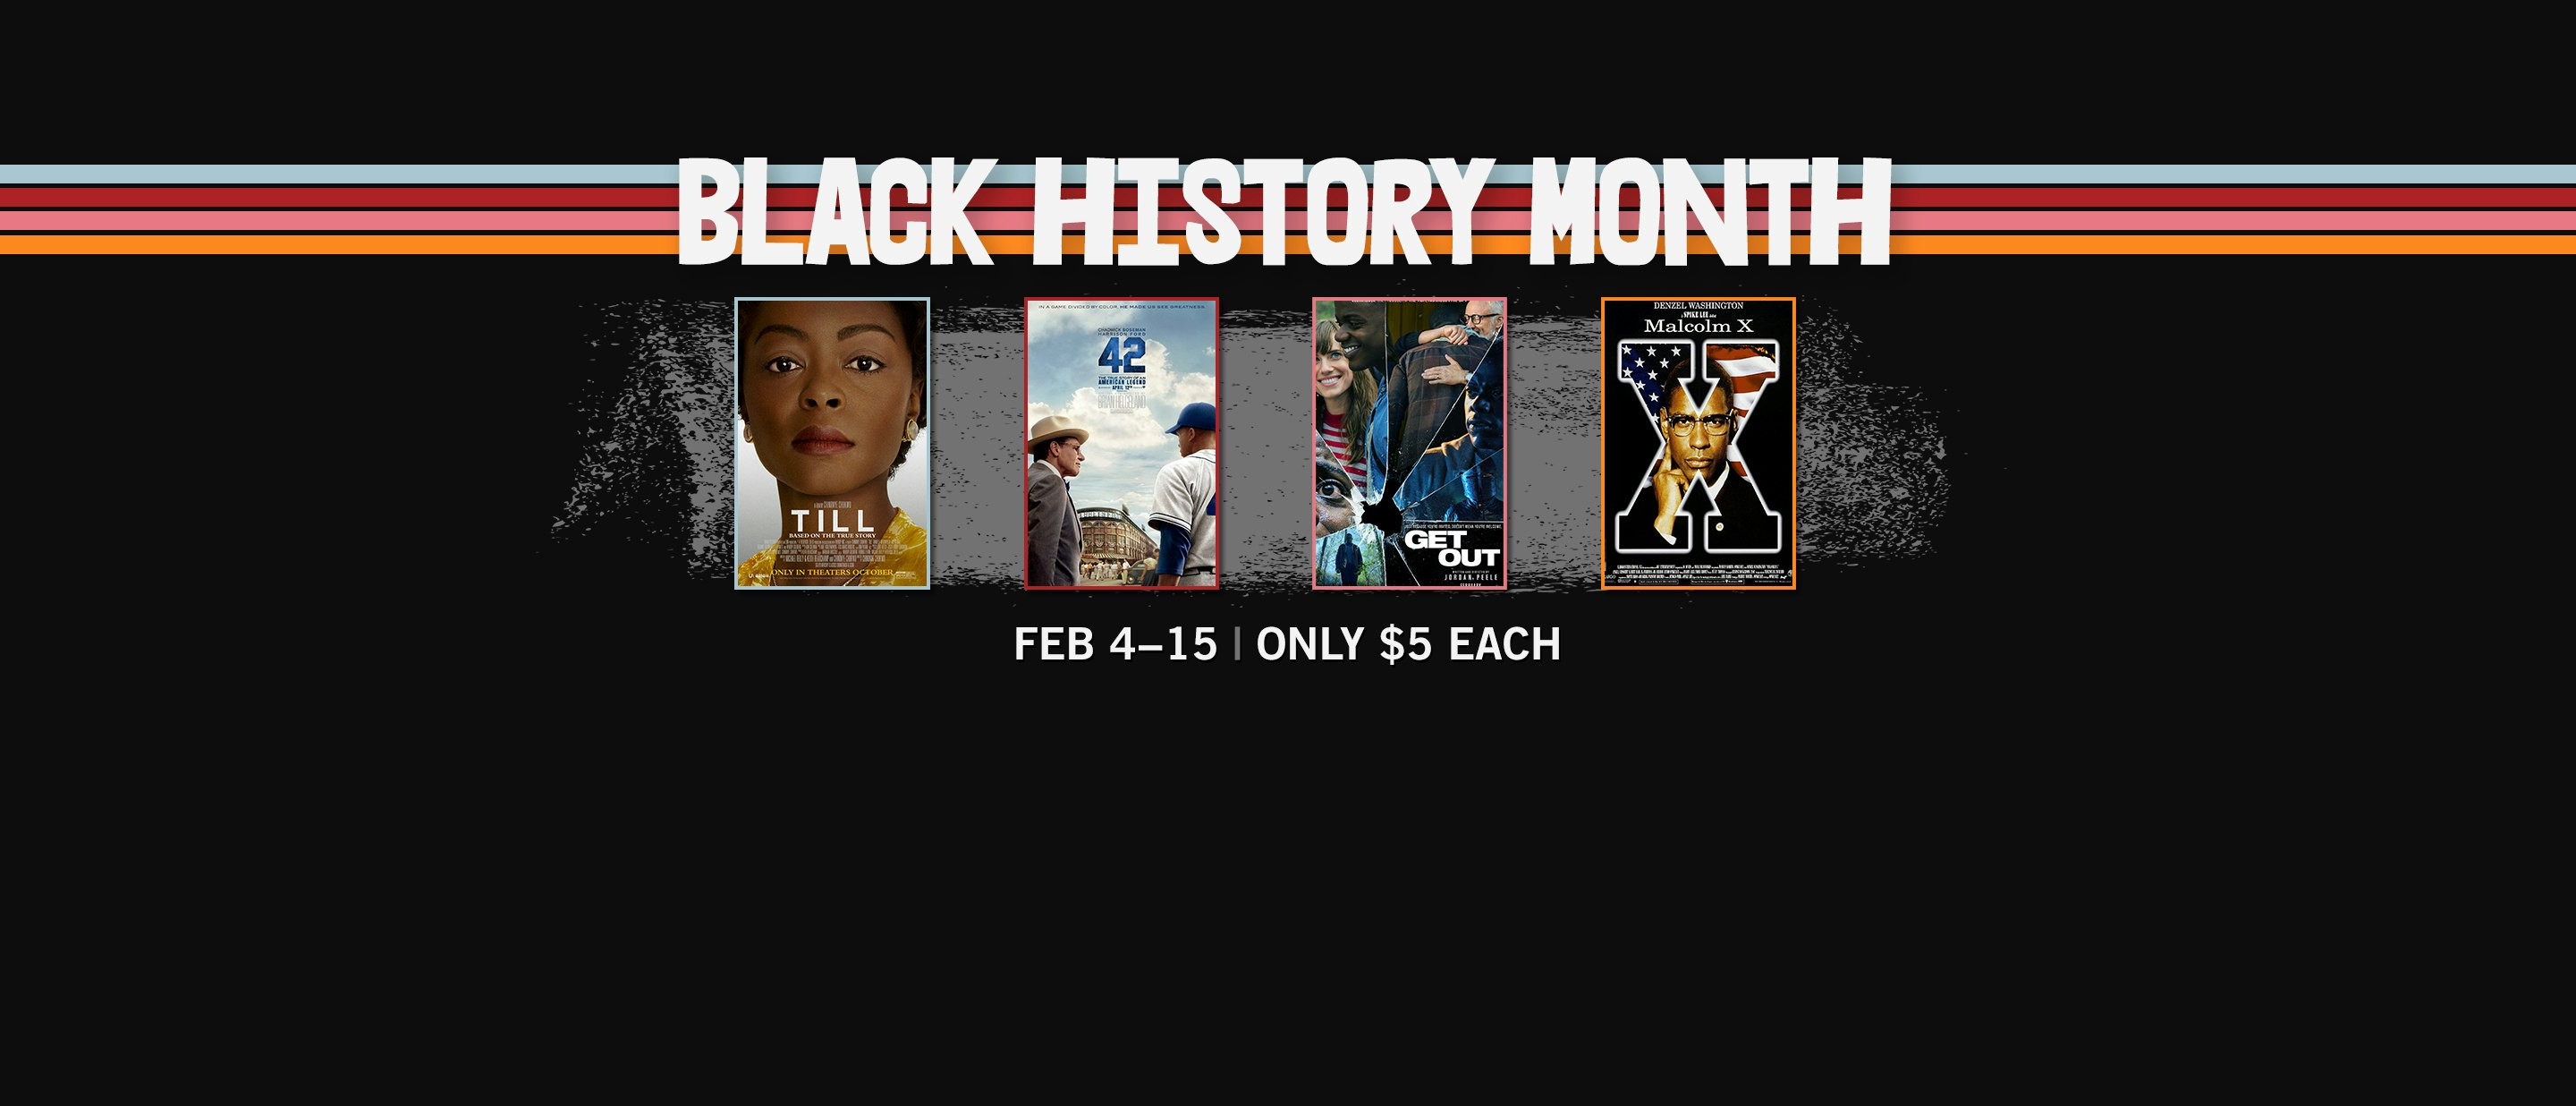 Black History Month At Harkins